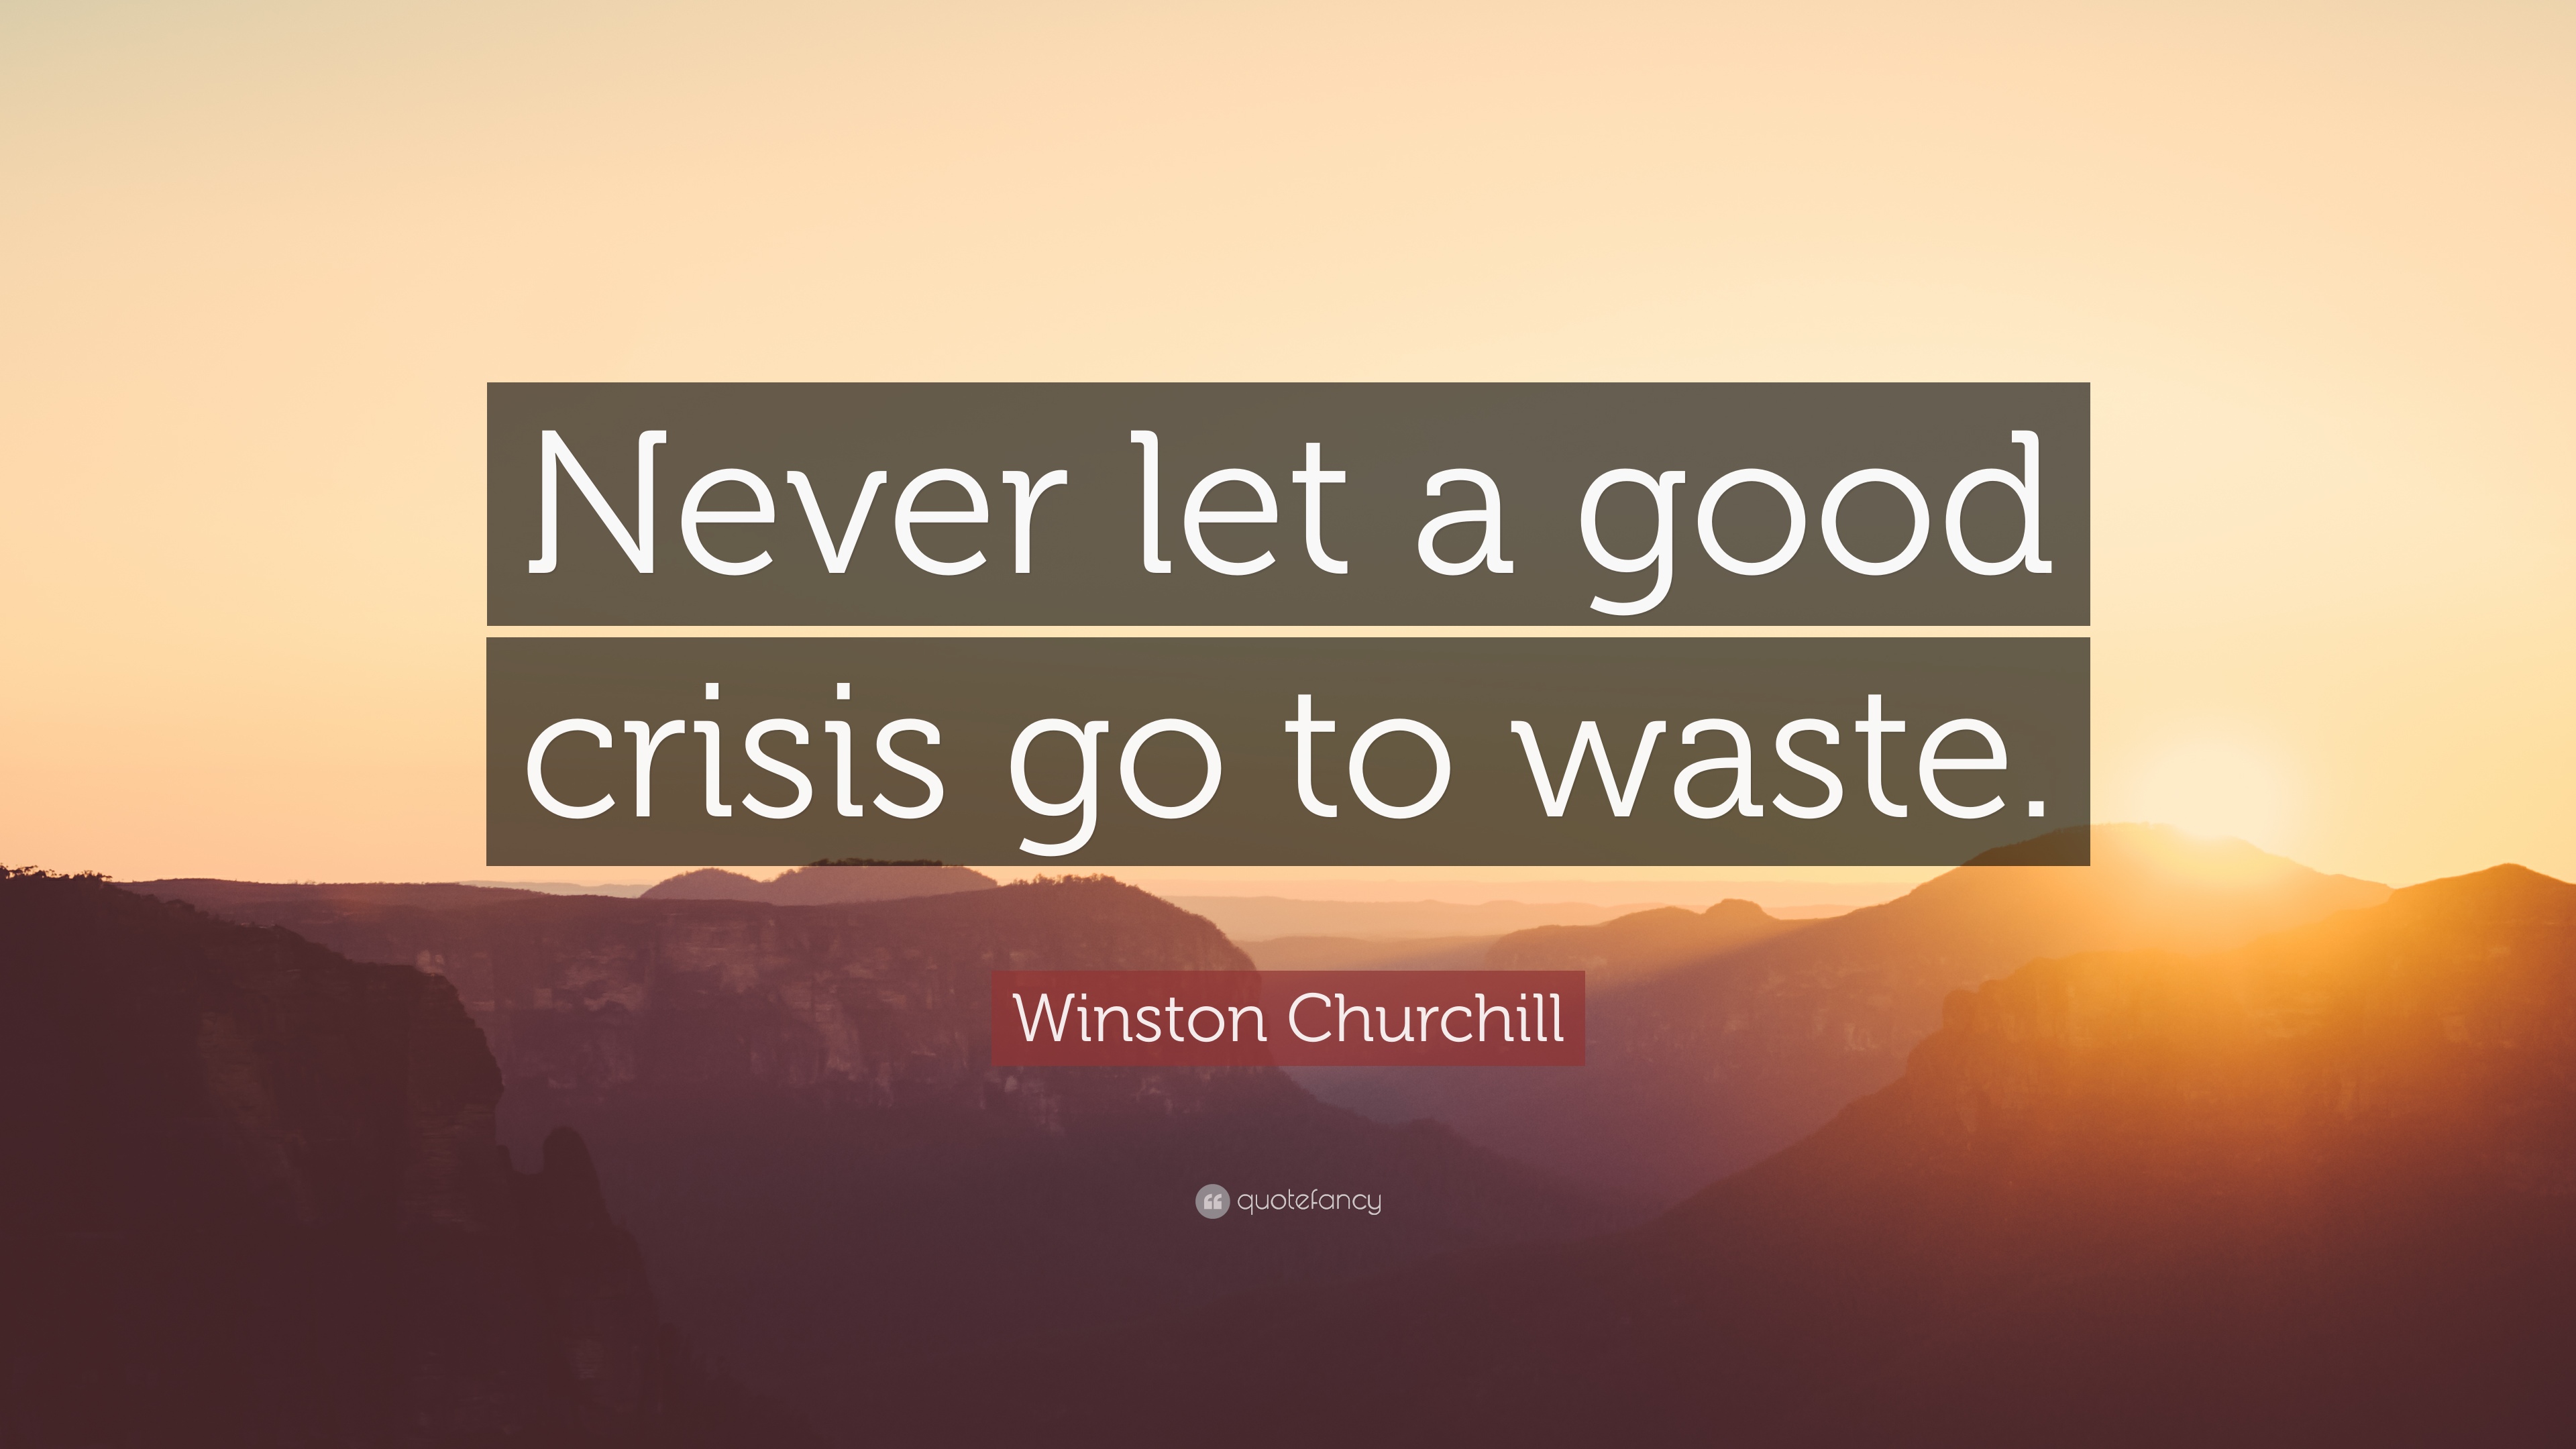 Never let a good crisis go waste